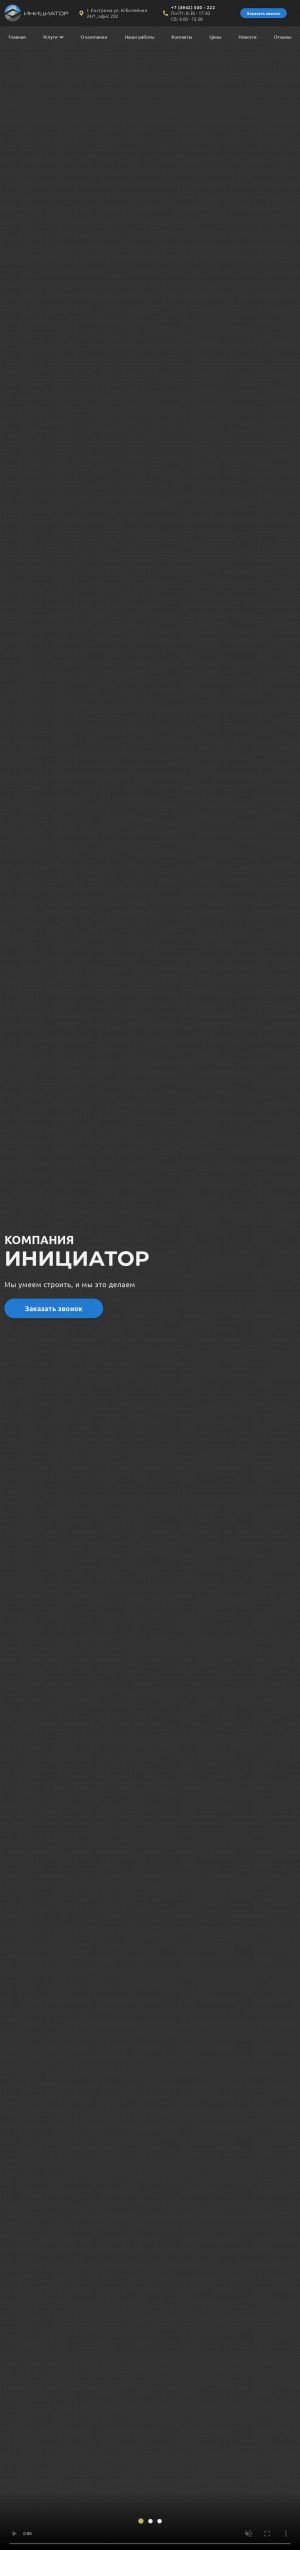 Предпросмотр для www.initciator.ru — Инициатор